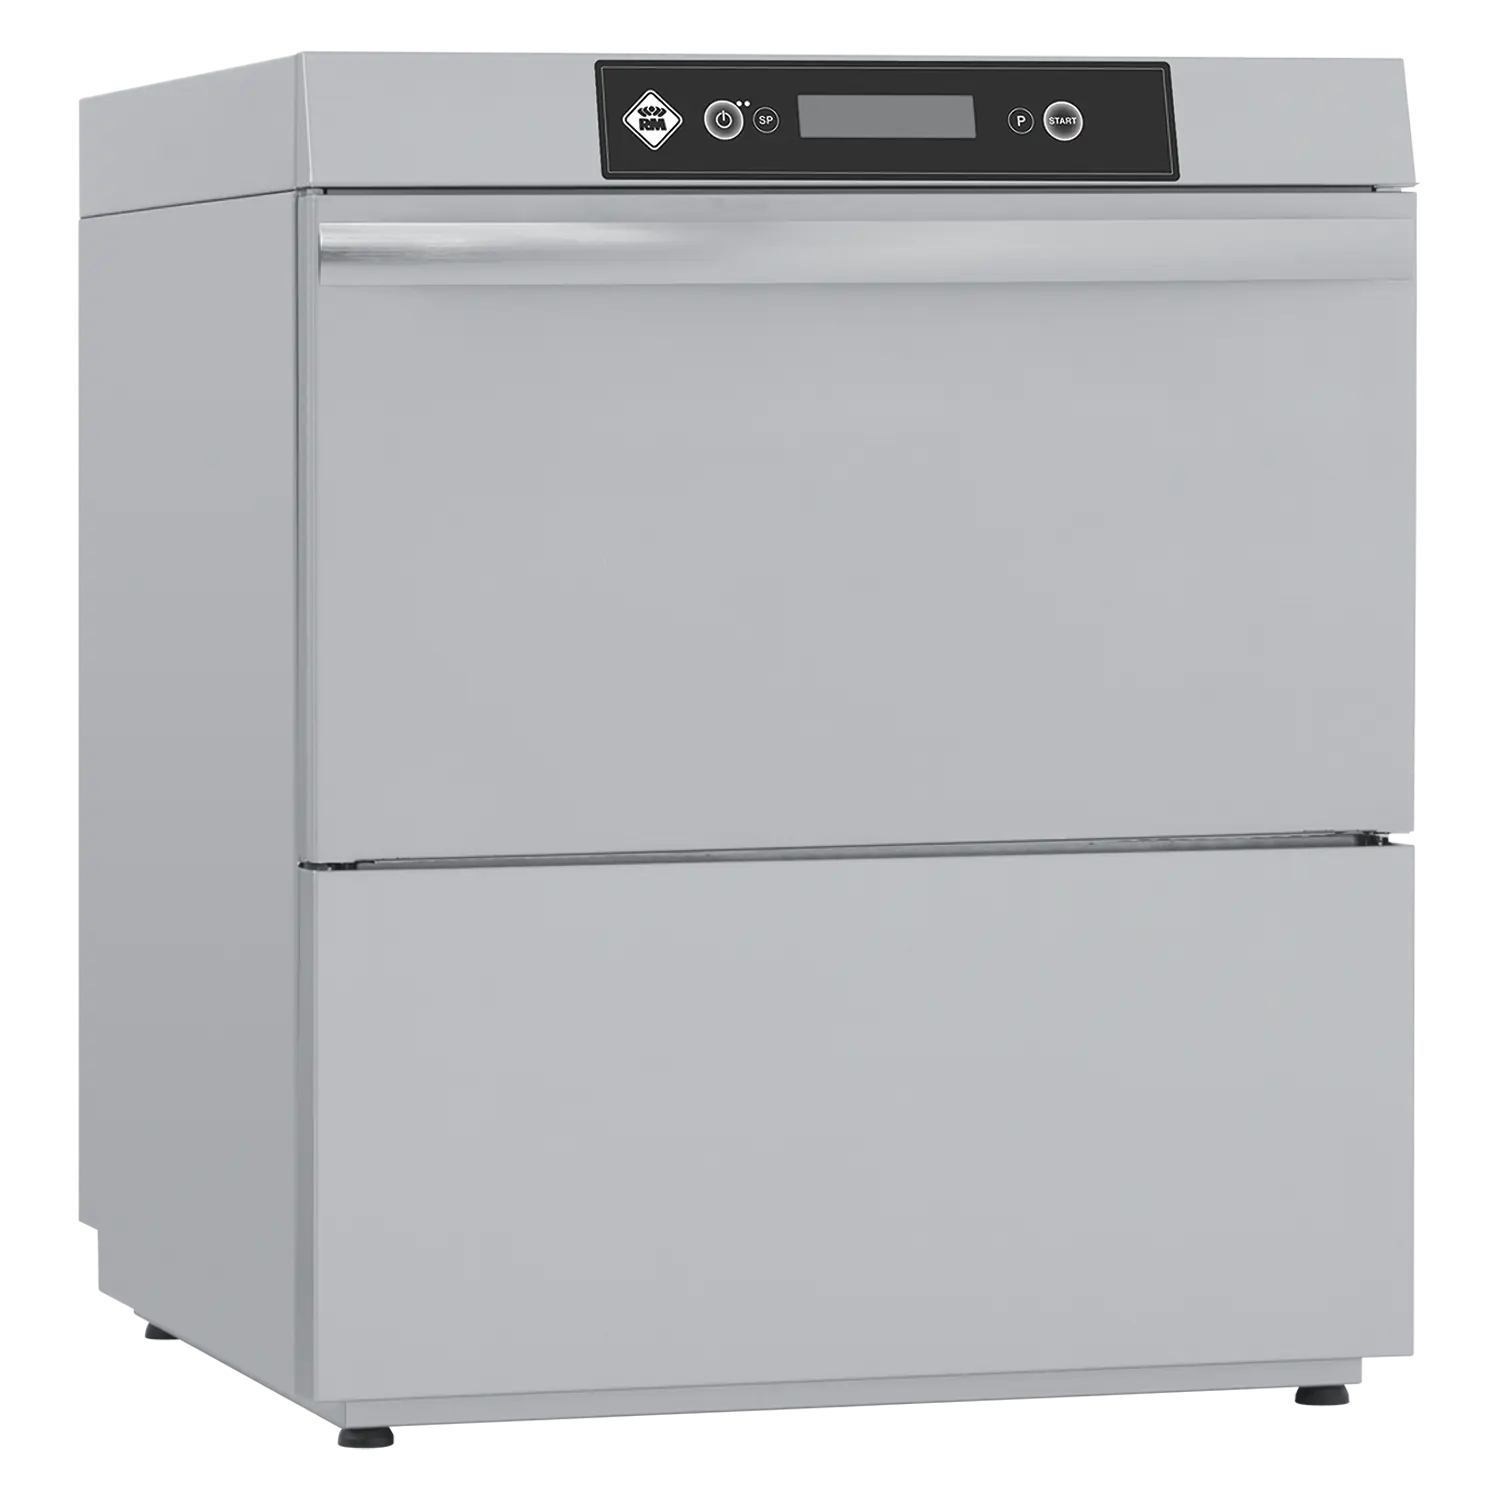 Undercounter dishwasher double skin 50x50 - 400 V | RM - TT 52 TS ABT